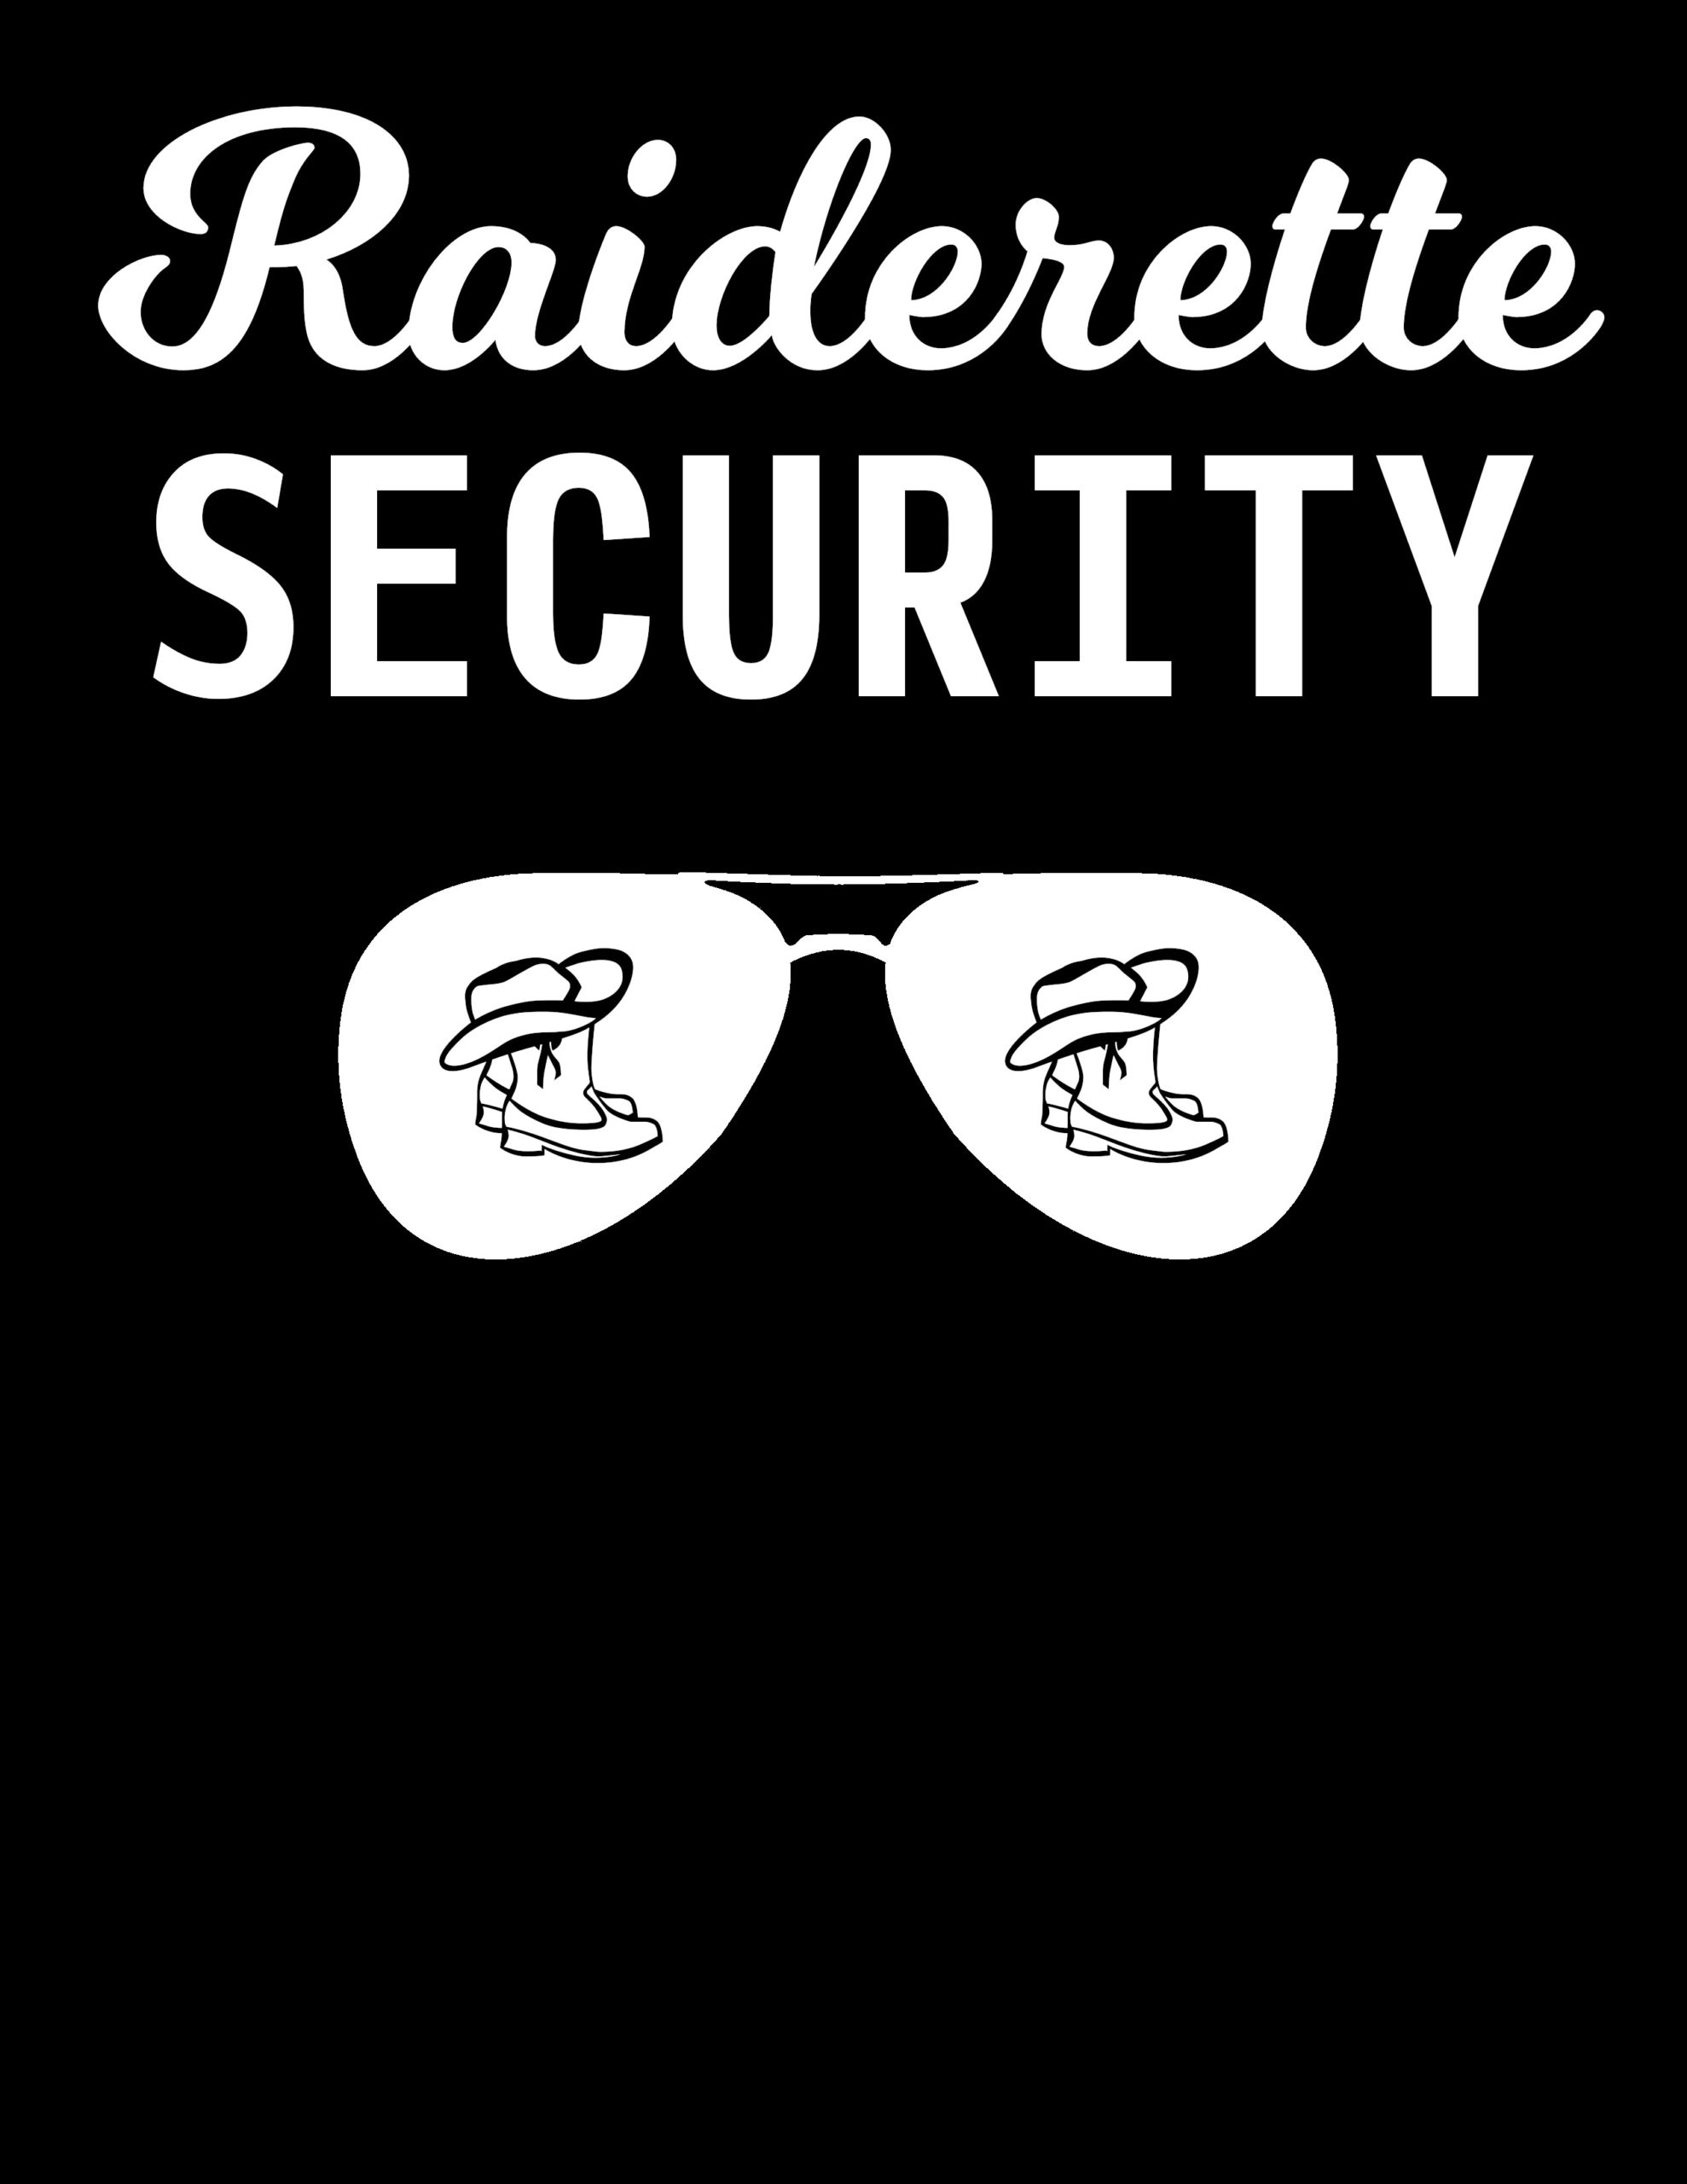 Raiderette security logo